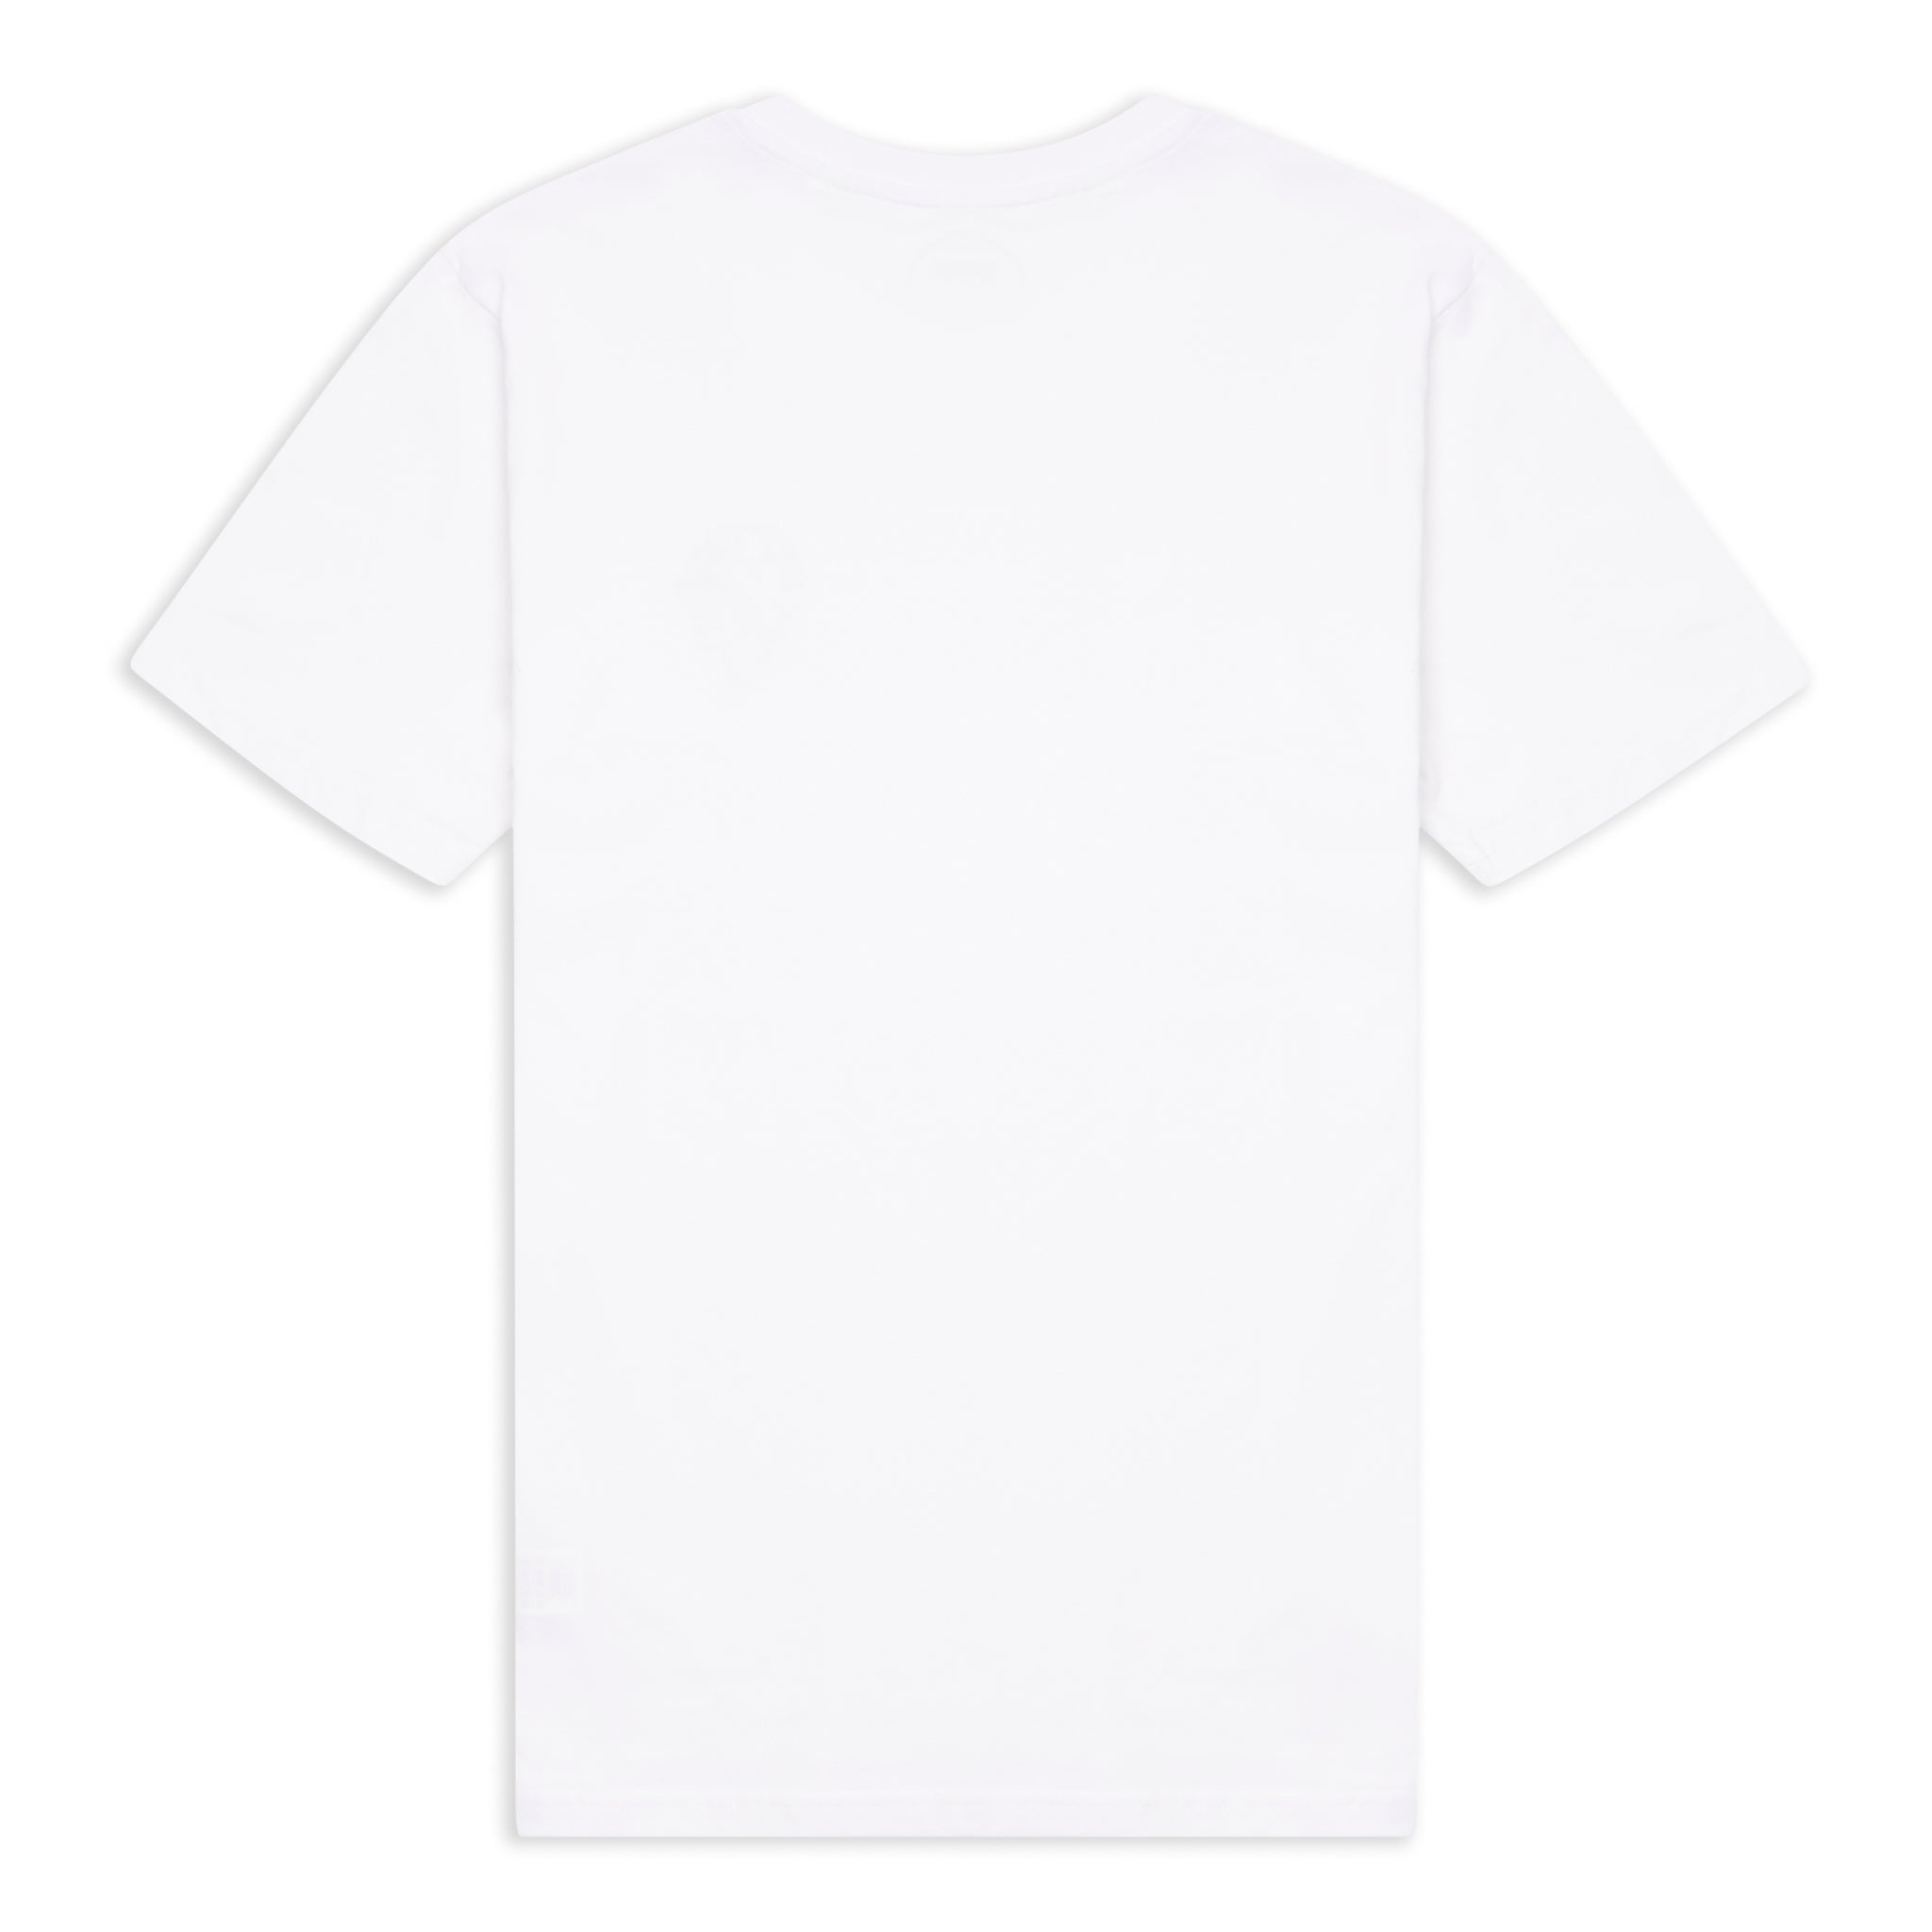 Tom Cridland's Face Logo 30 Year™ T-Shirt